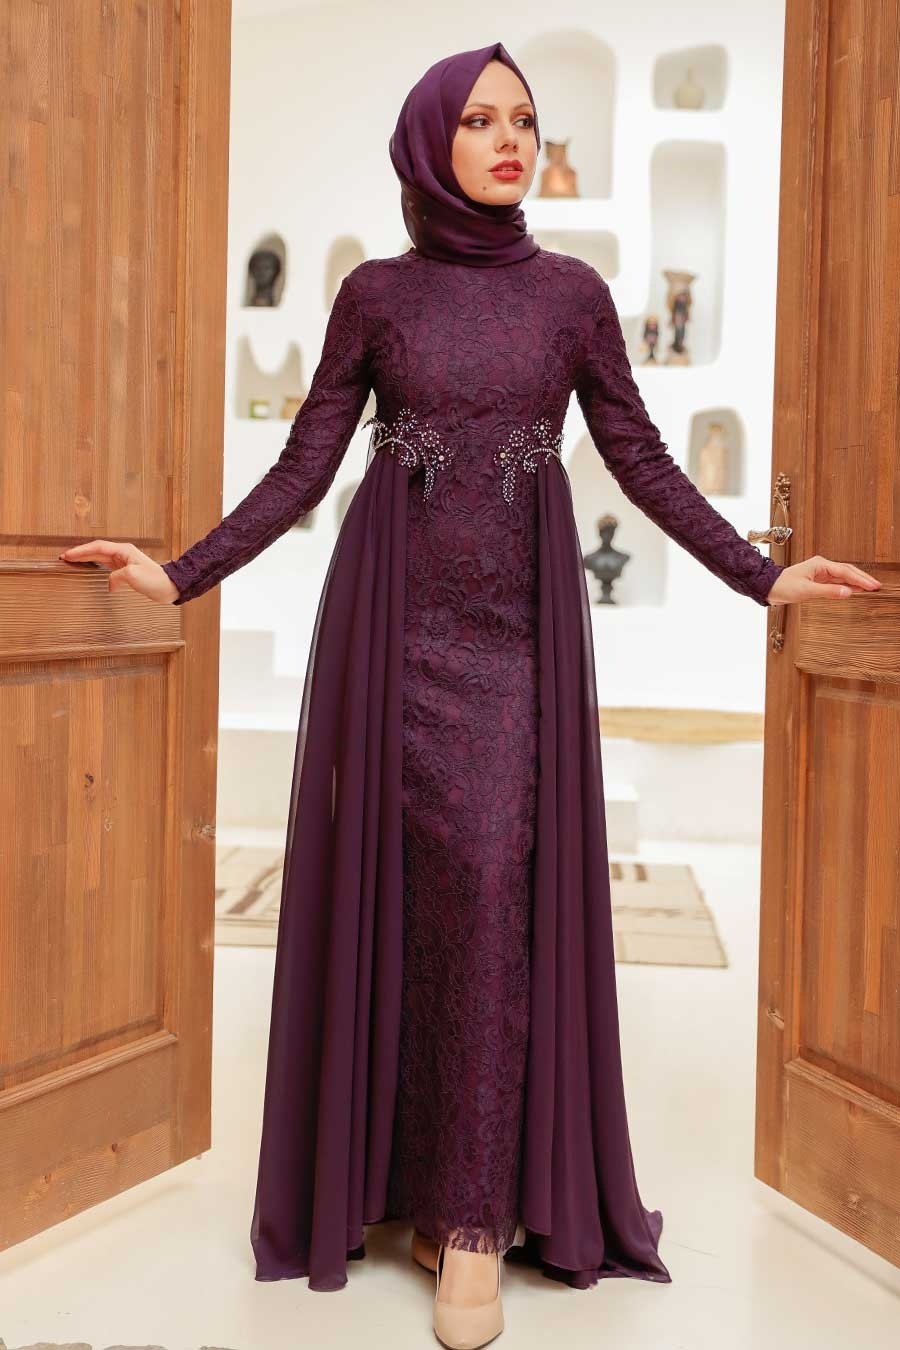 neva style - stylish plum color hijab wedding gown 9105mu